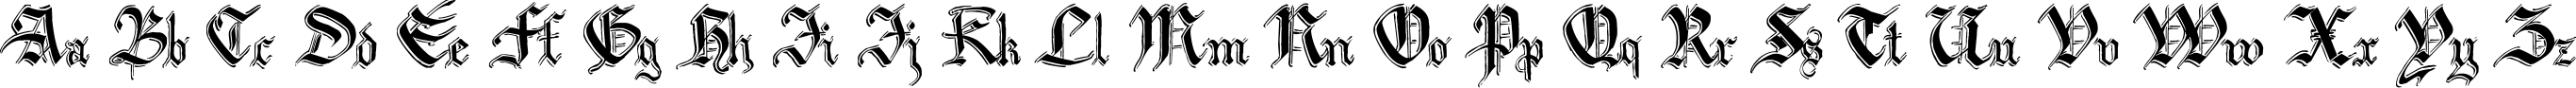 Пример написания английского алфавита шрифтом Argor Biw Scaqh